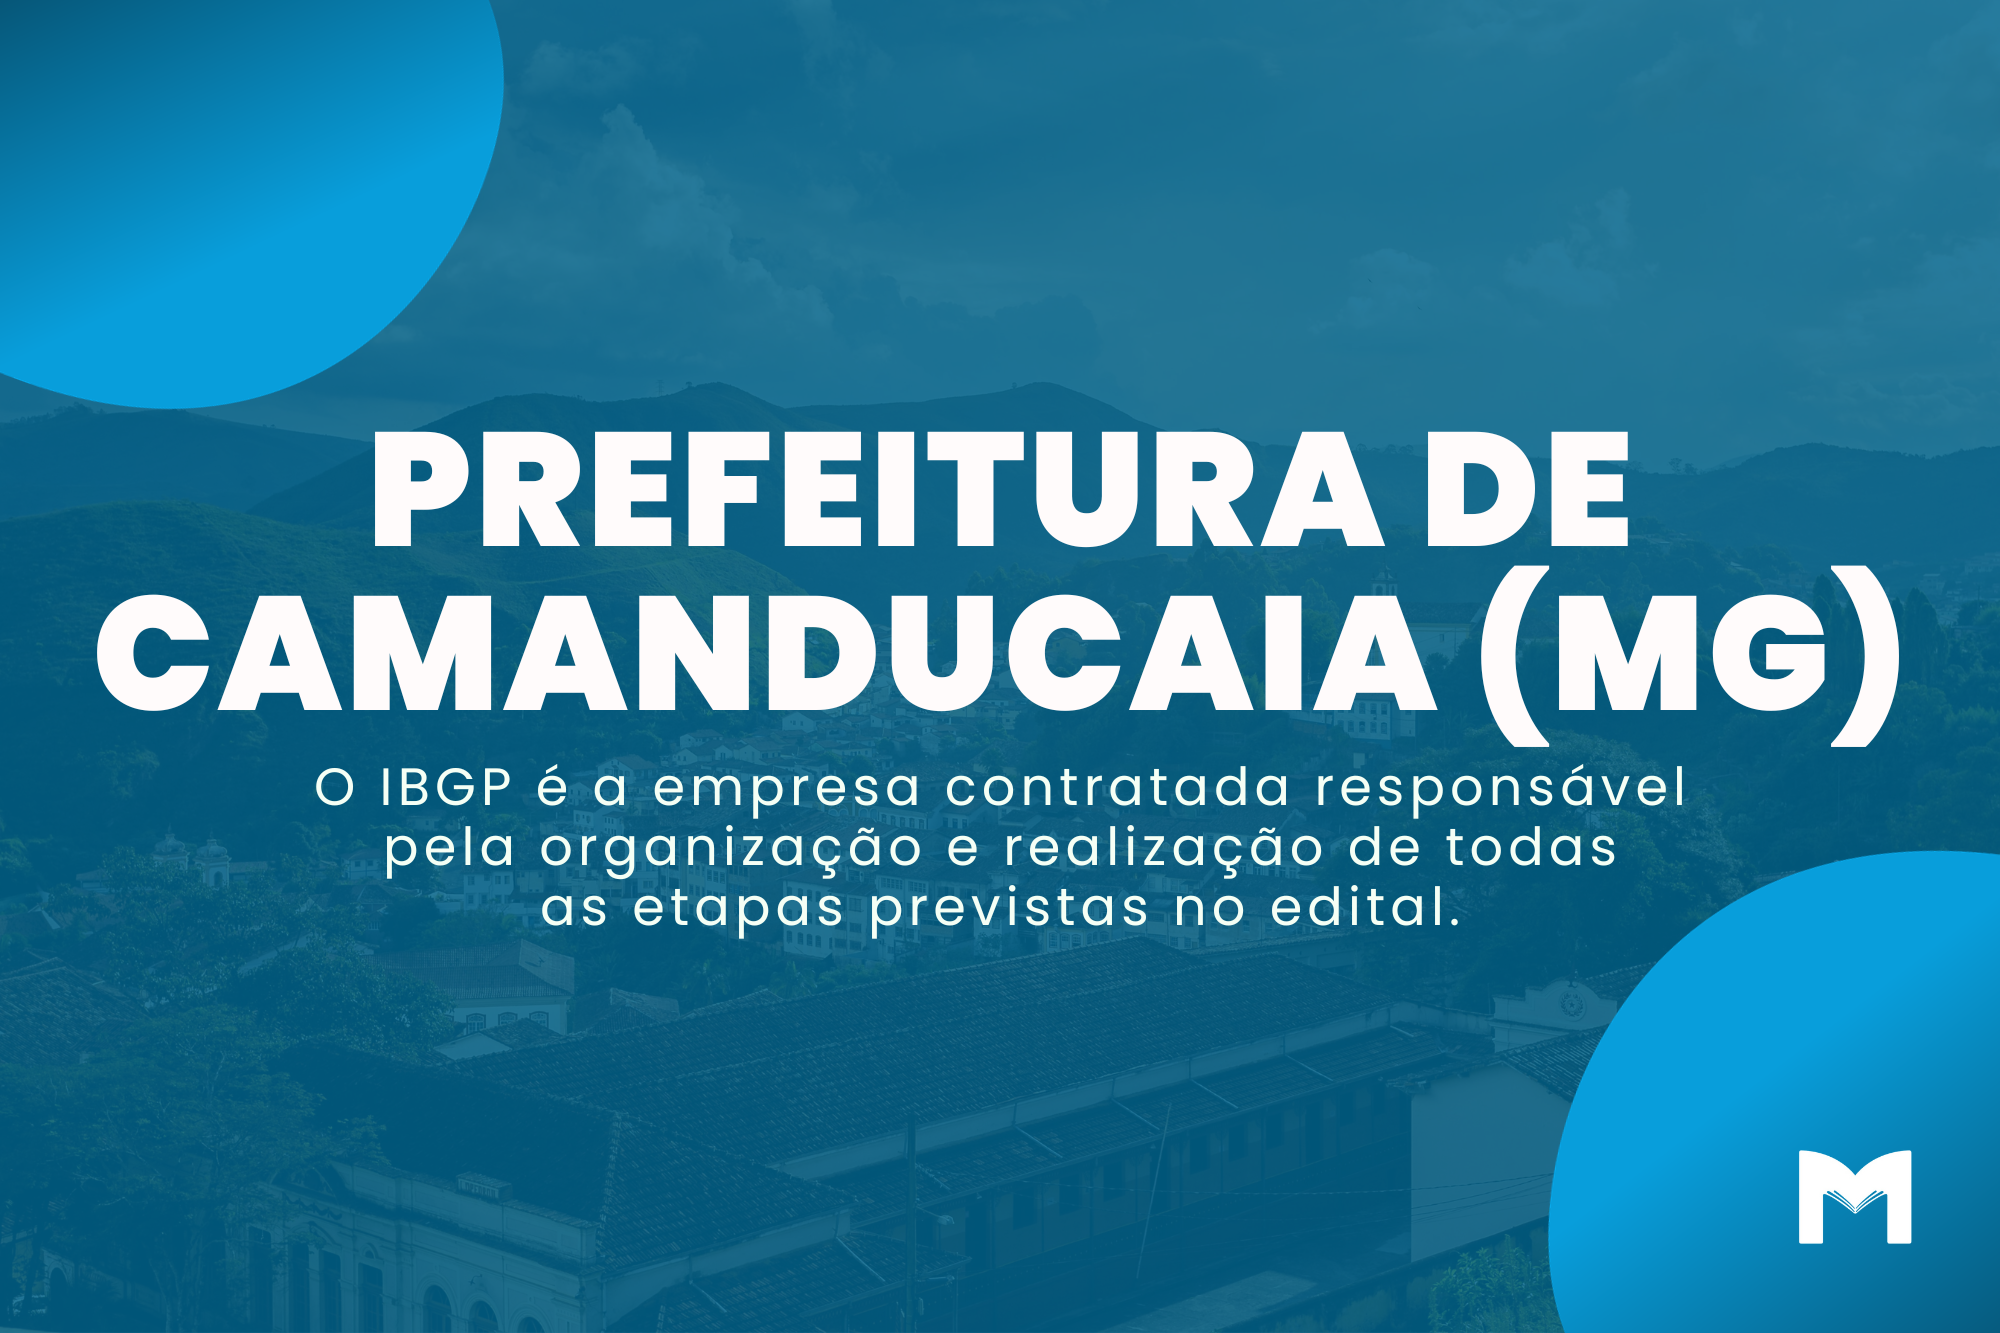 Prefeitura de Camanducaia MG: Novo edital para Área da Saúde!